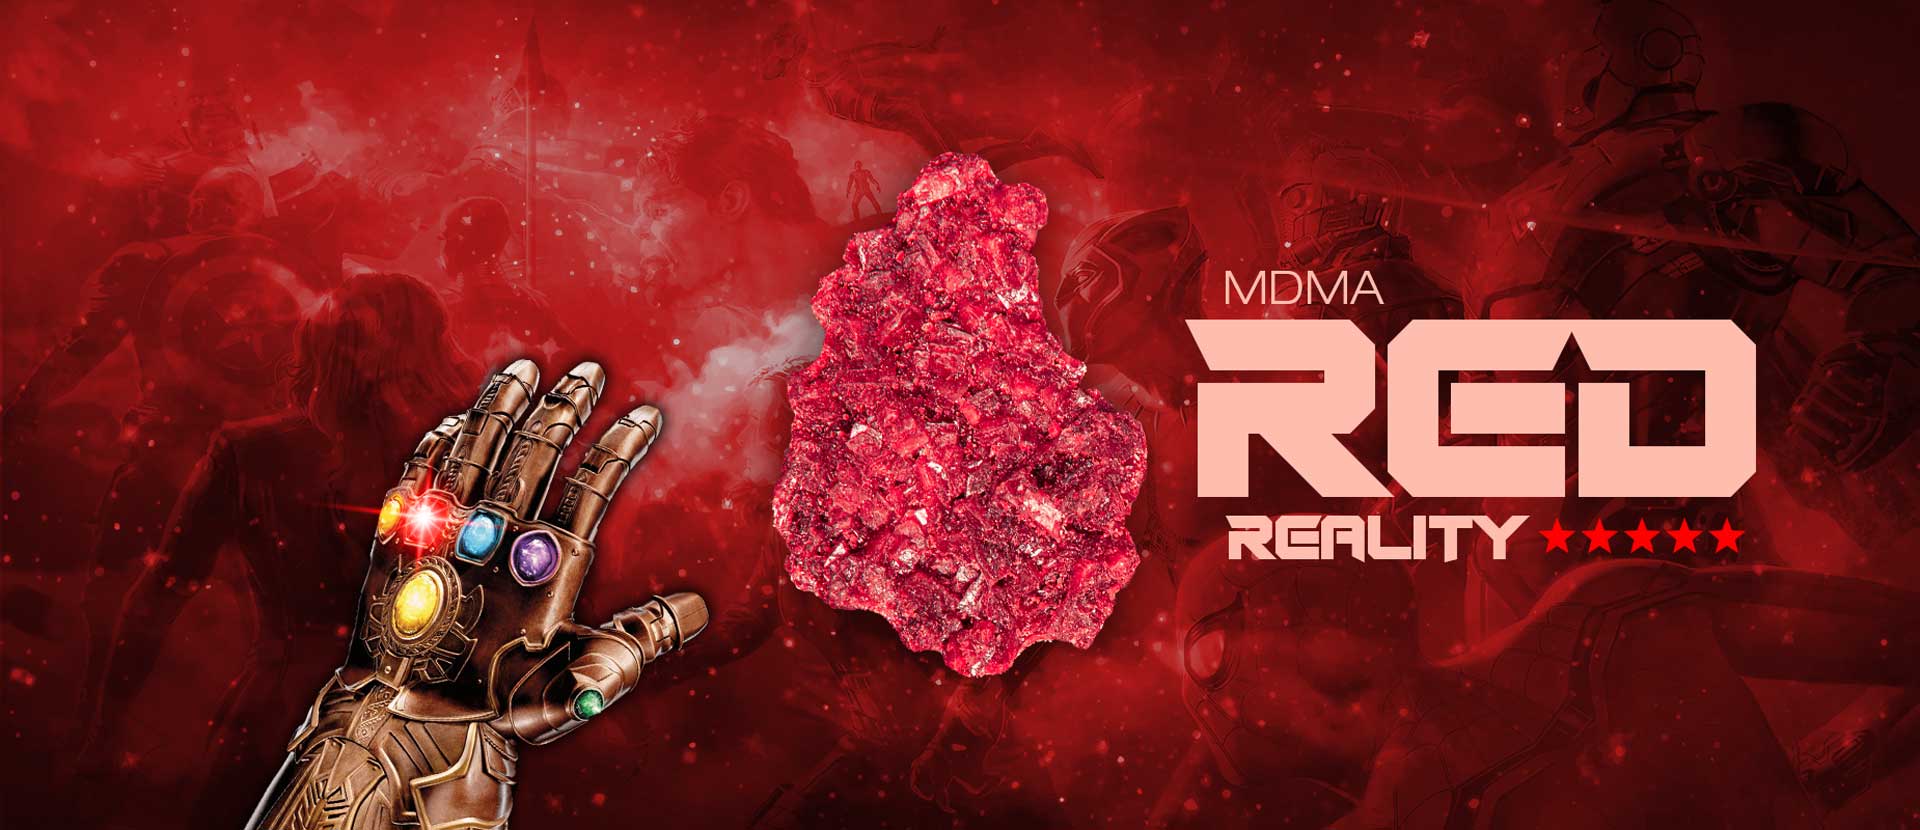 red-reality-banner-mdma-big